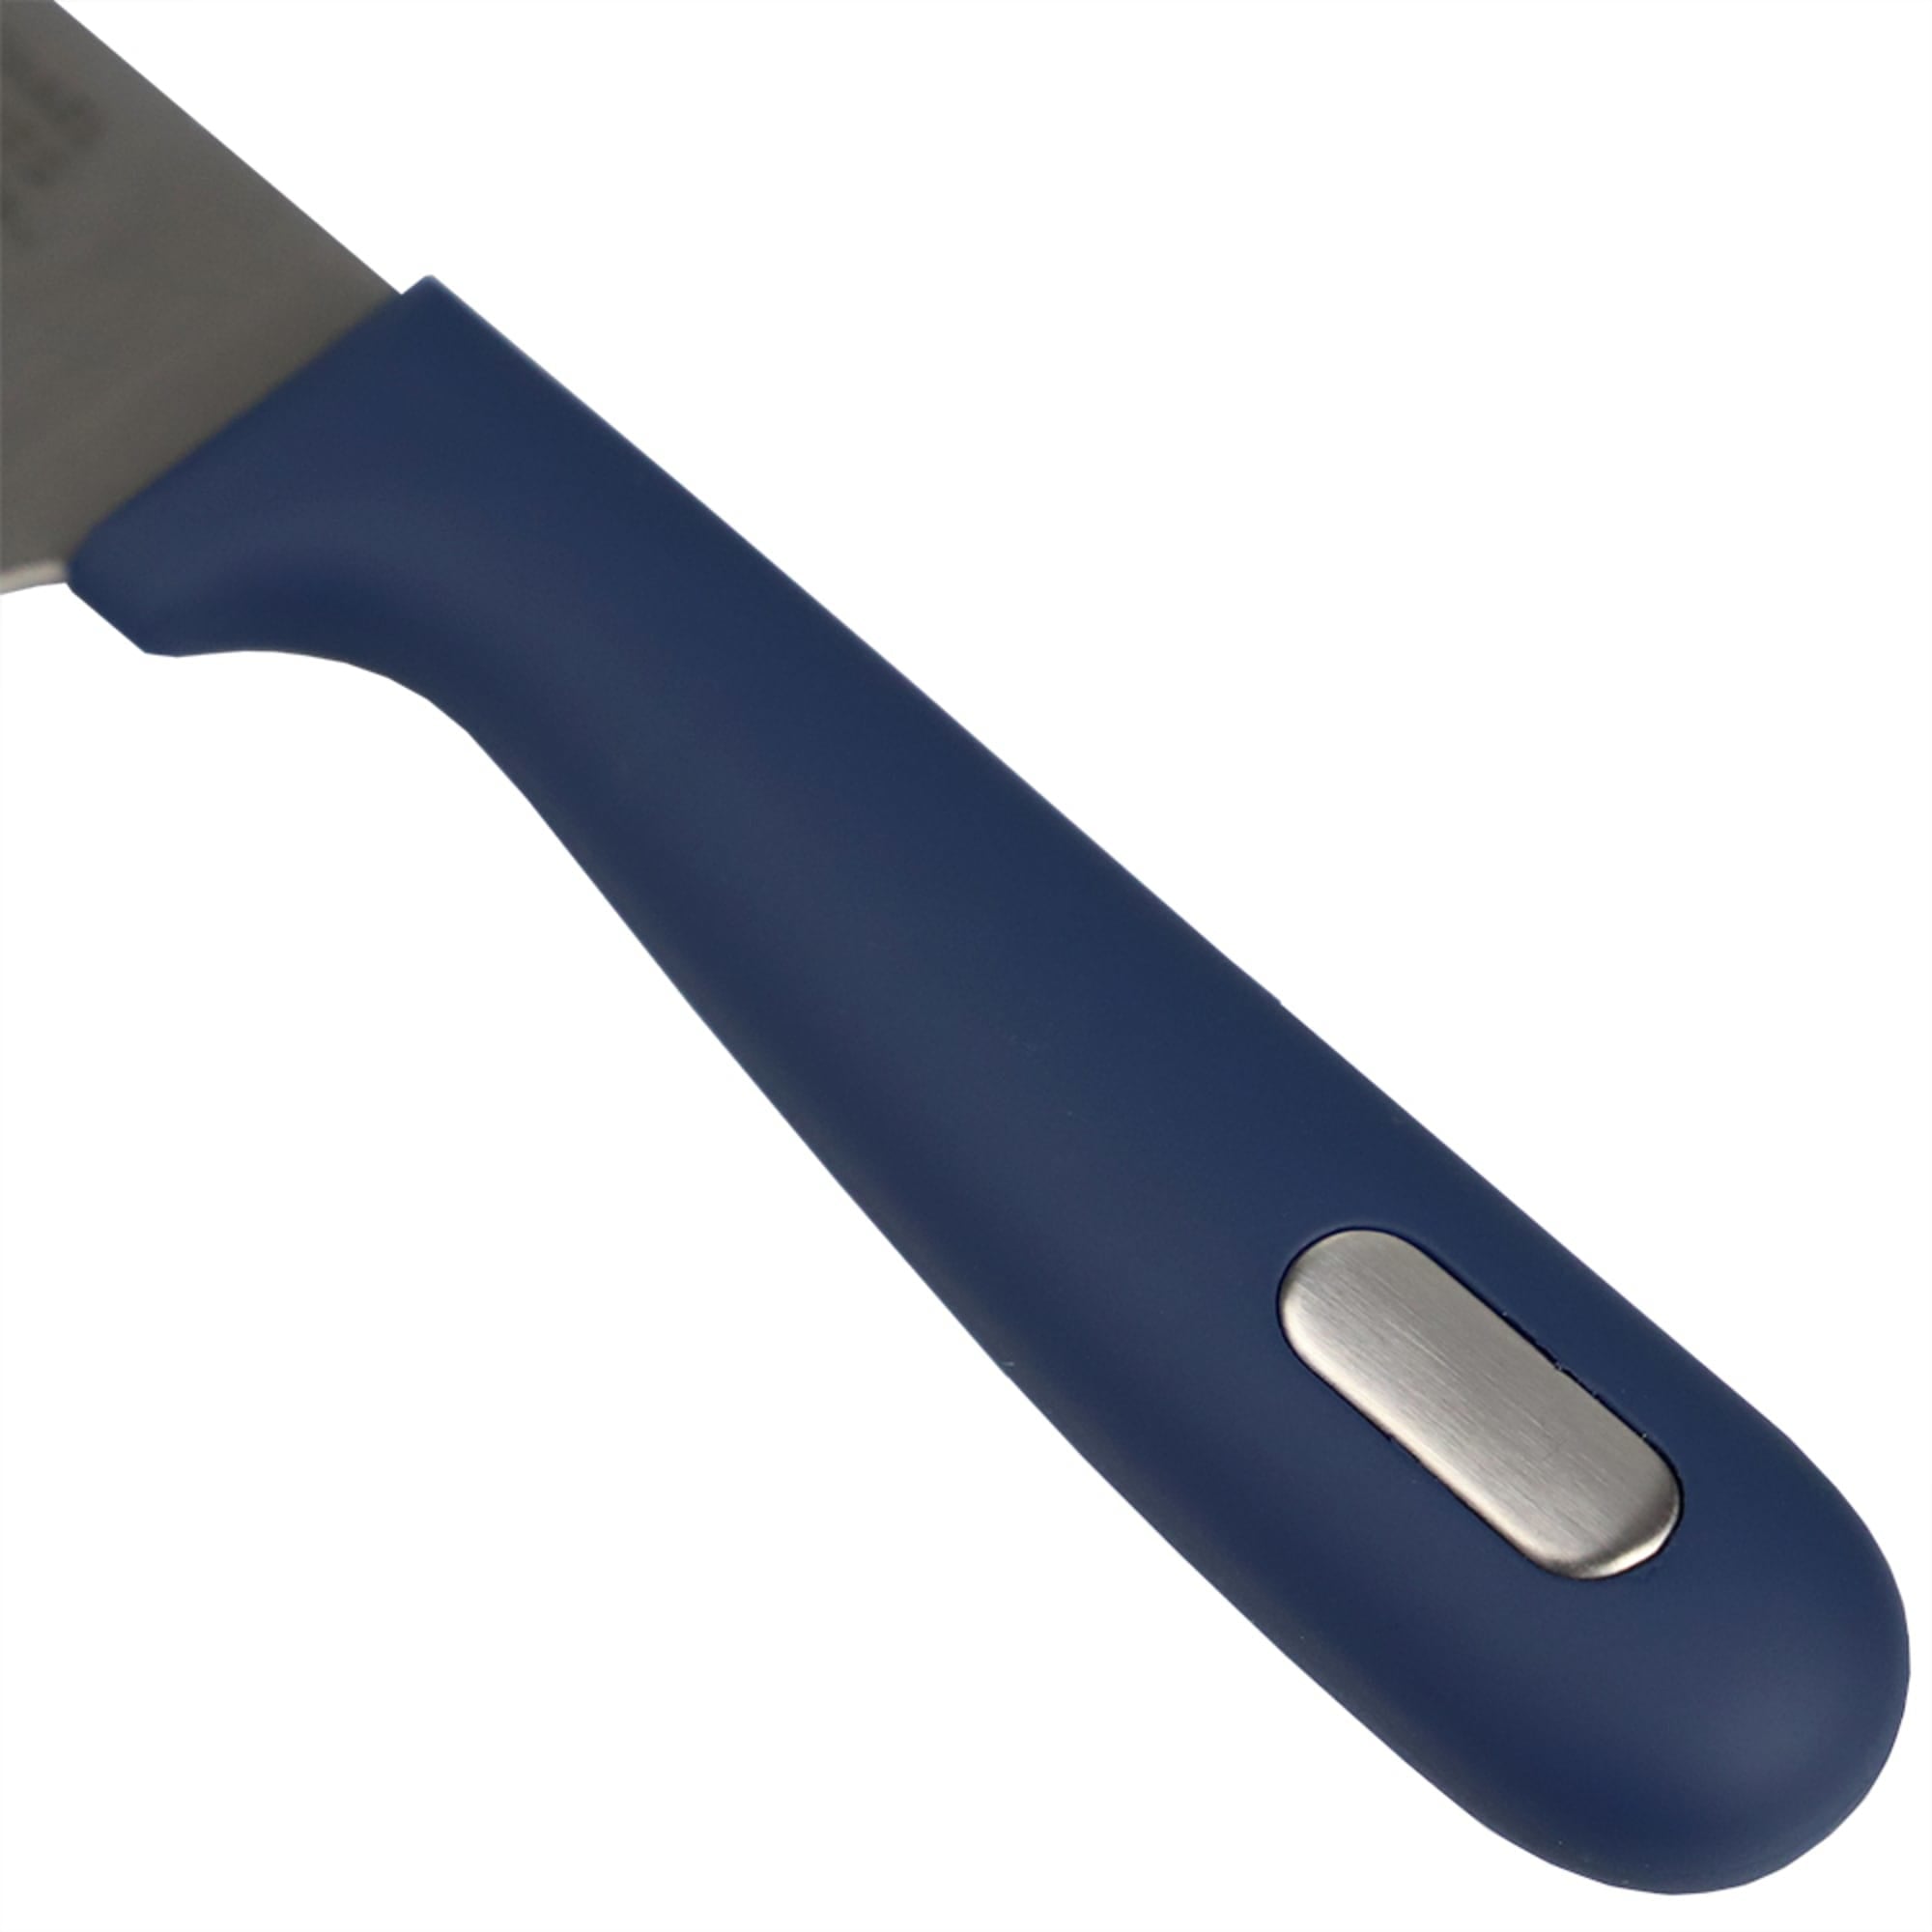 Michael Graves Design Comfortable Grip 5 Inch Stainless Steel Santoku Knife, Indigo $3.00 EACH, CASE PACK OF 24